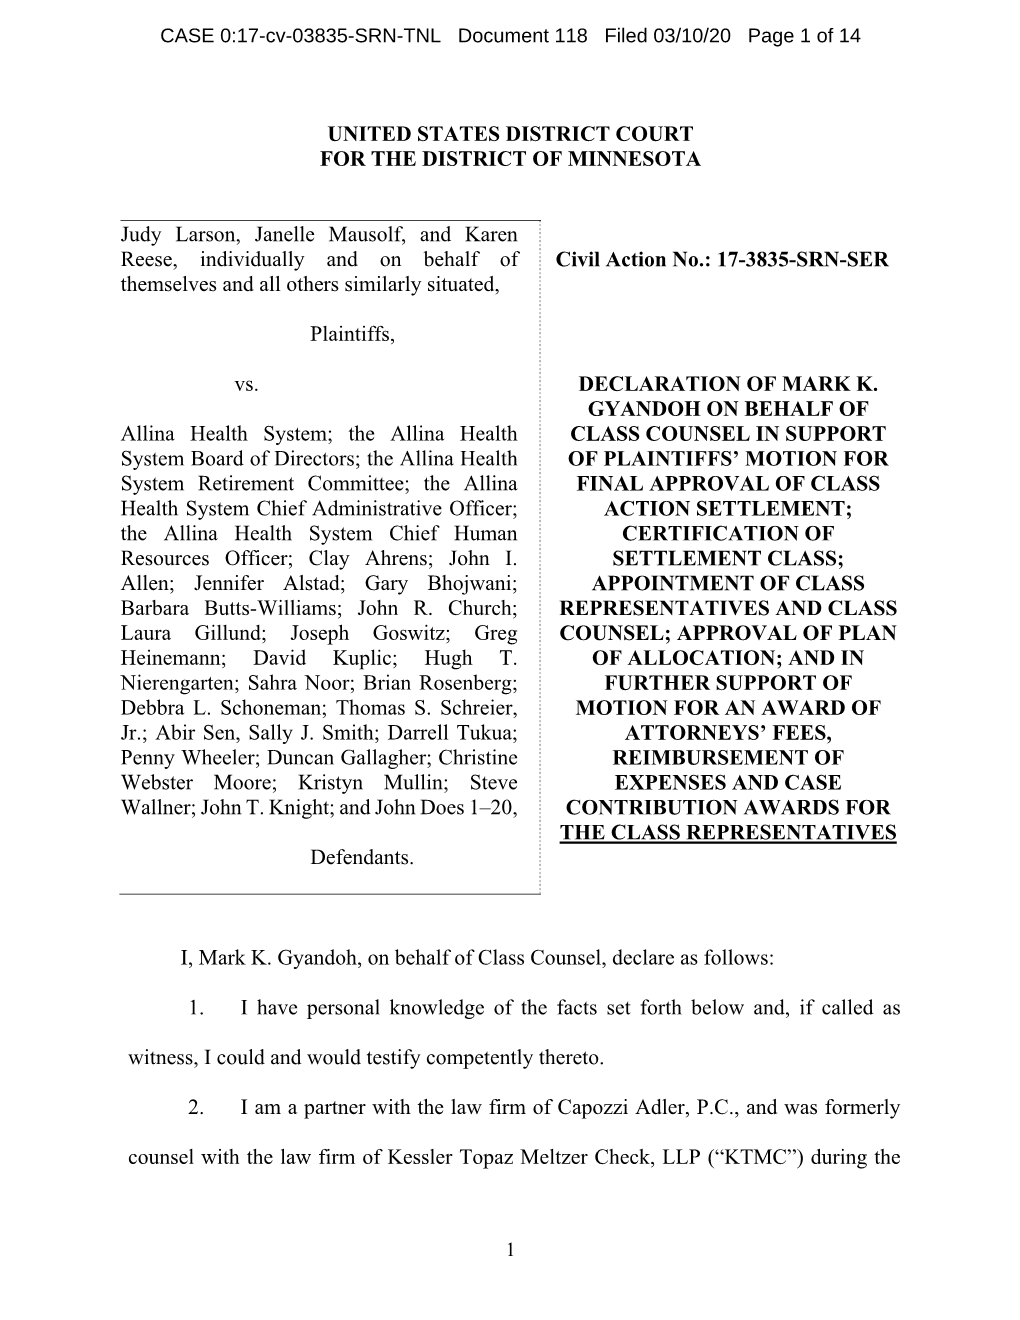 Declaration of Mark K. Gyandoh in Support of Plaintiffs' Motion for Final Approval